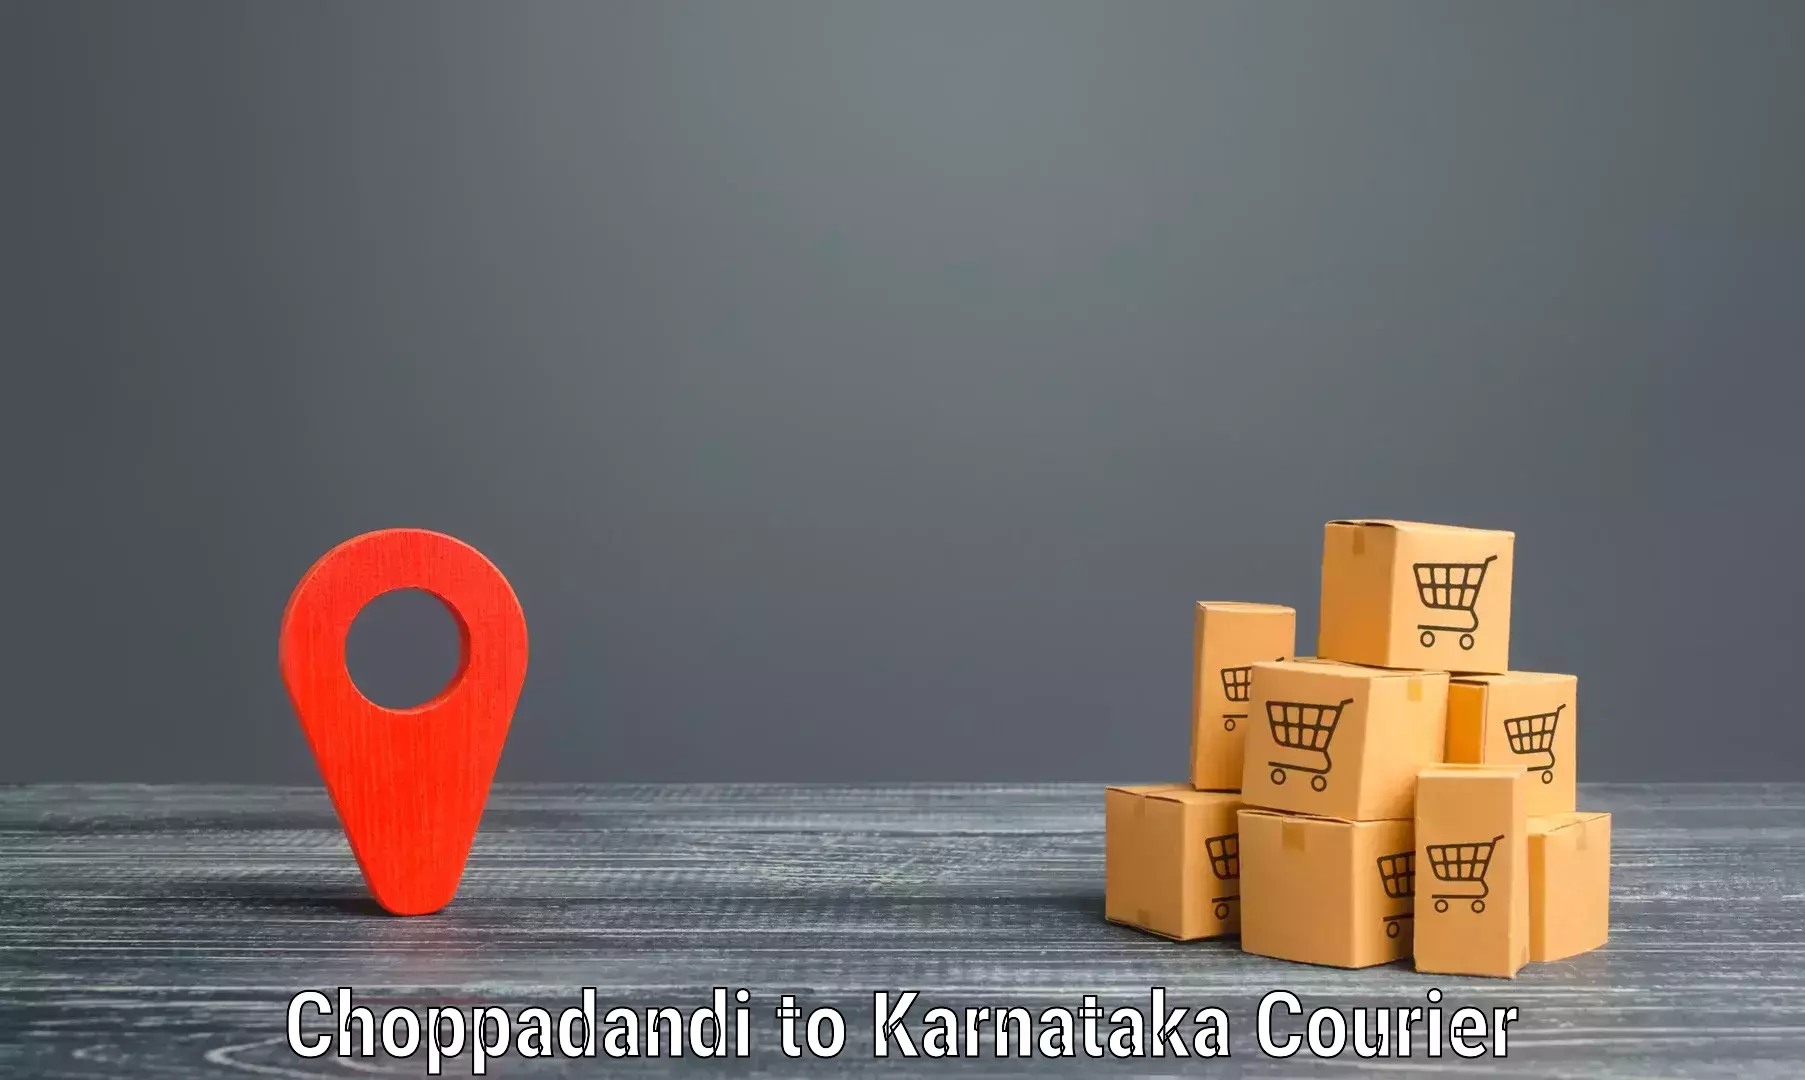 Overnight delivery services Choppadandi to Mysore University